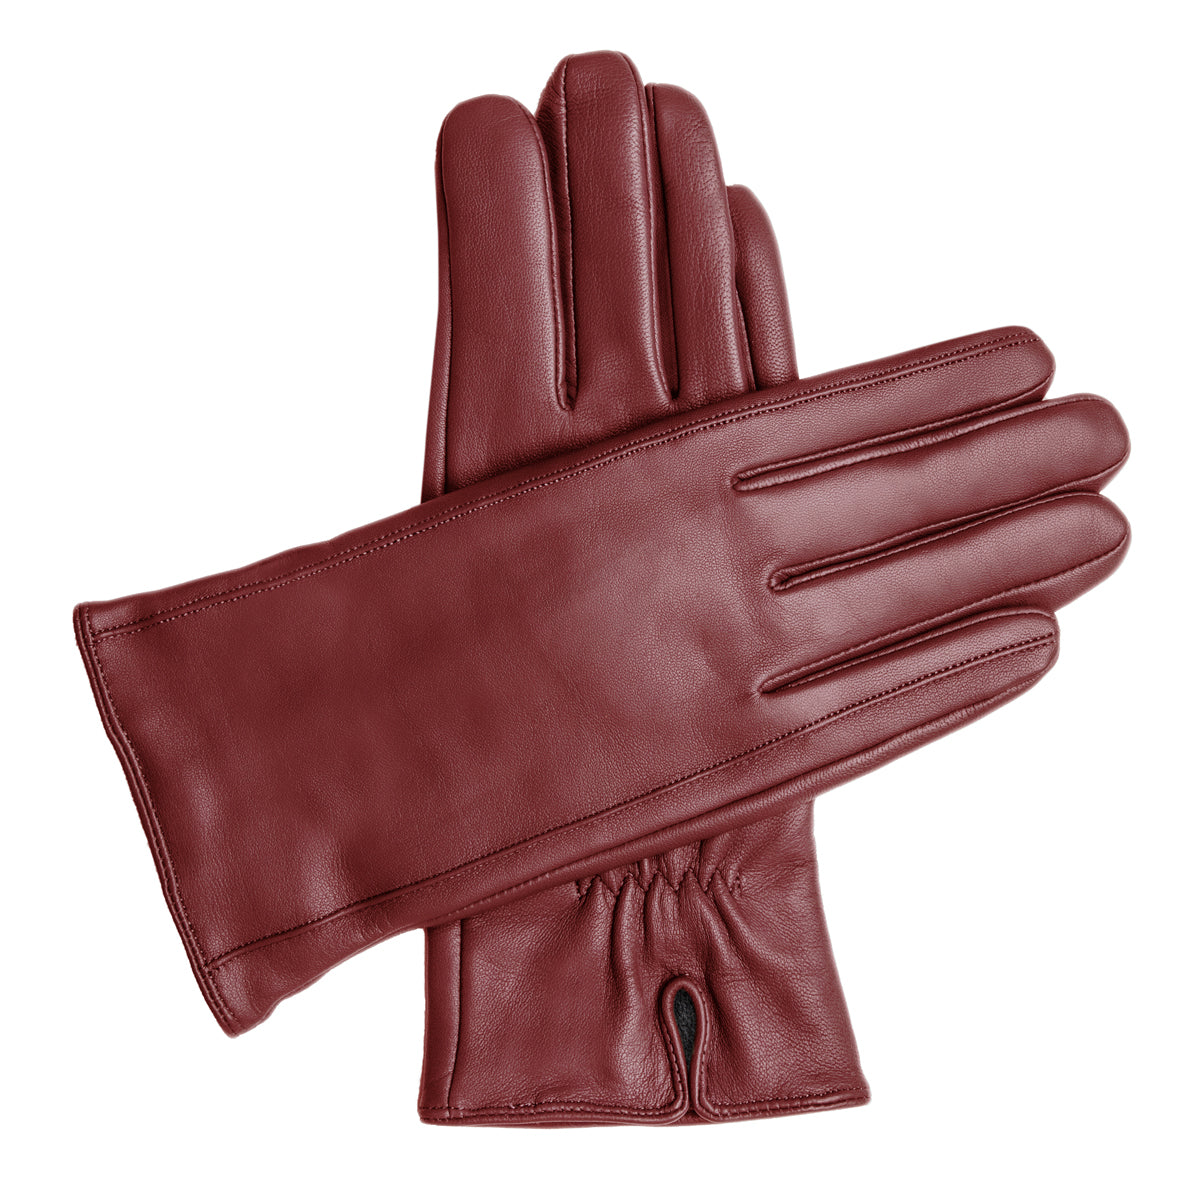 Women's Vegan Leather Gloves - Burgundy, DH-VLW-BDYS, DH-VLW-BDYM, DH-VLW-BDYL, DH-VLW-BDYXL